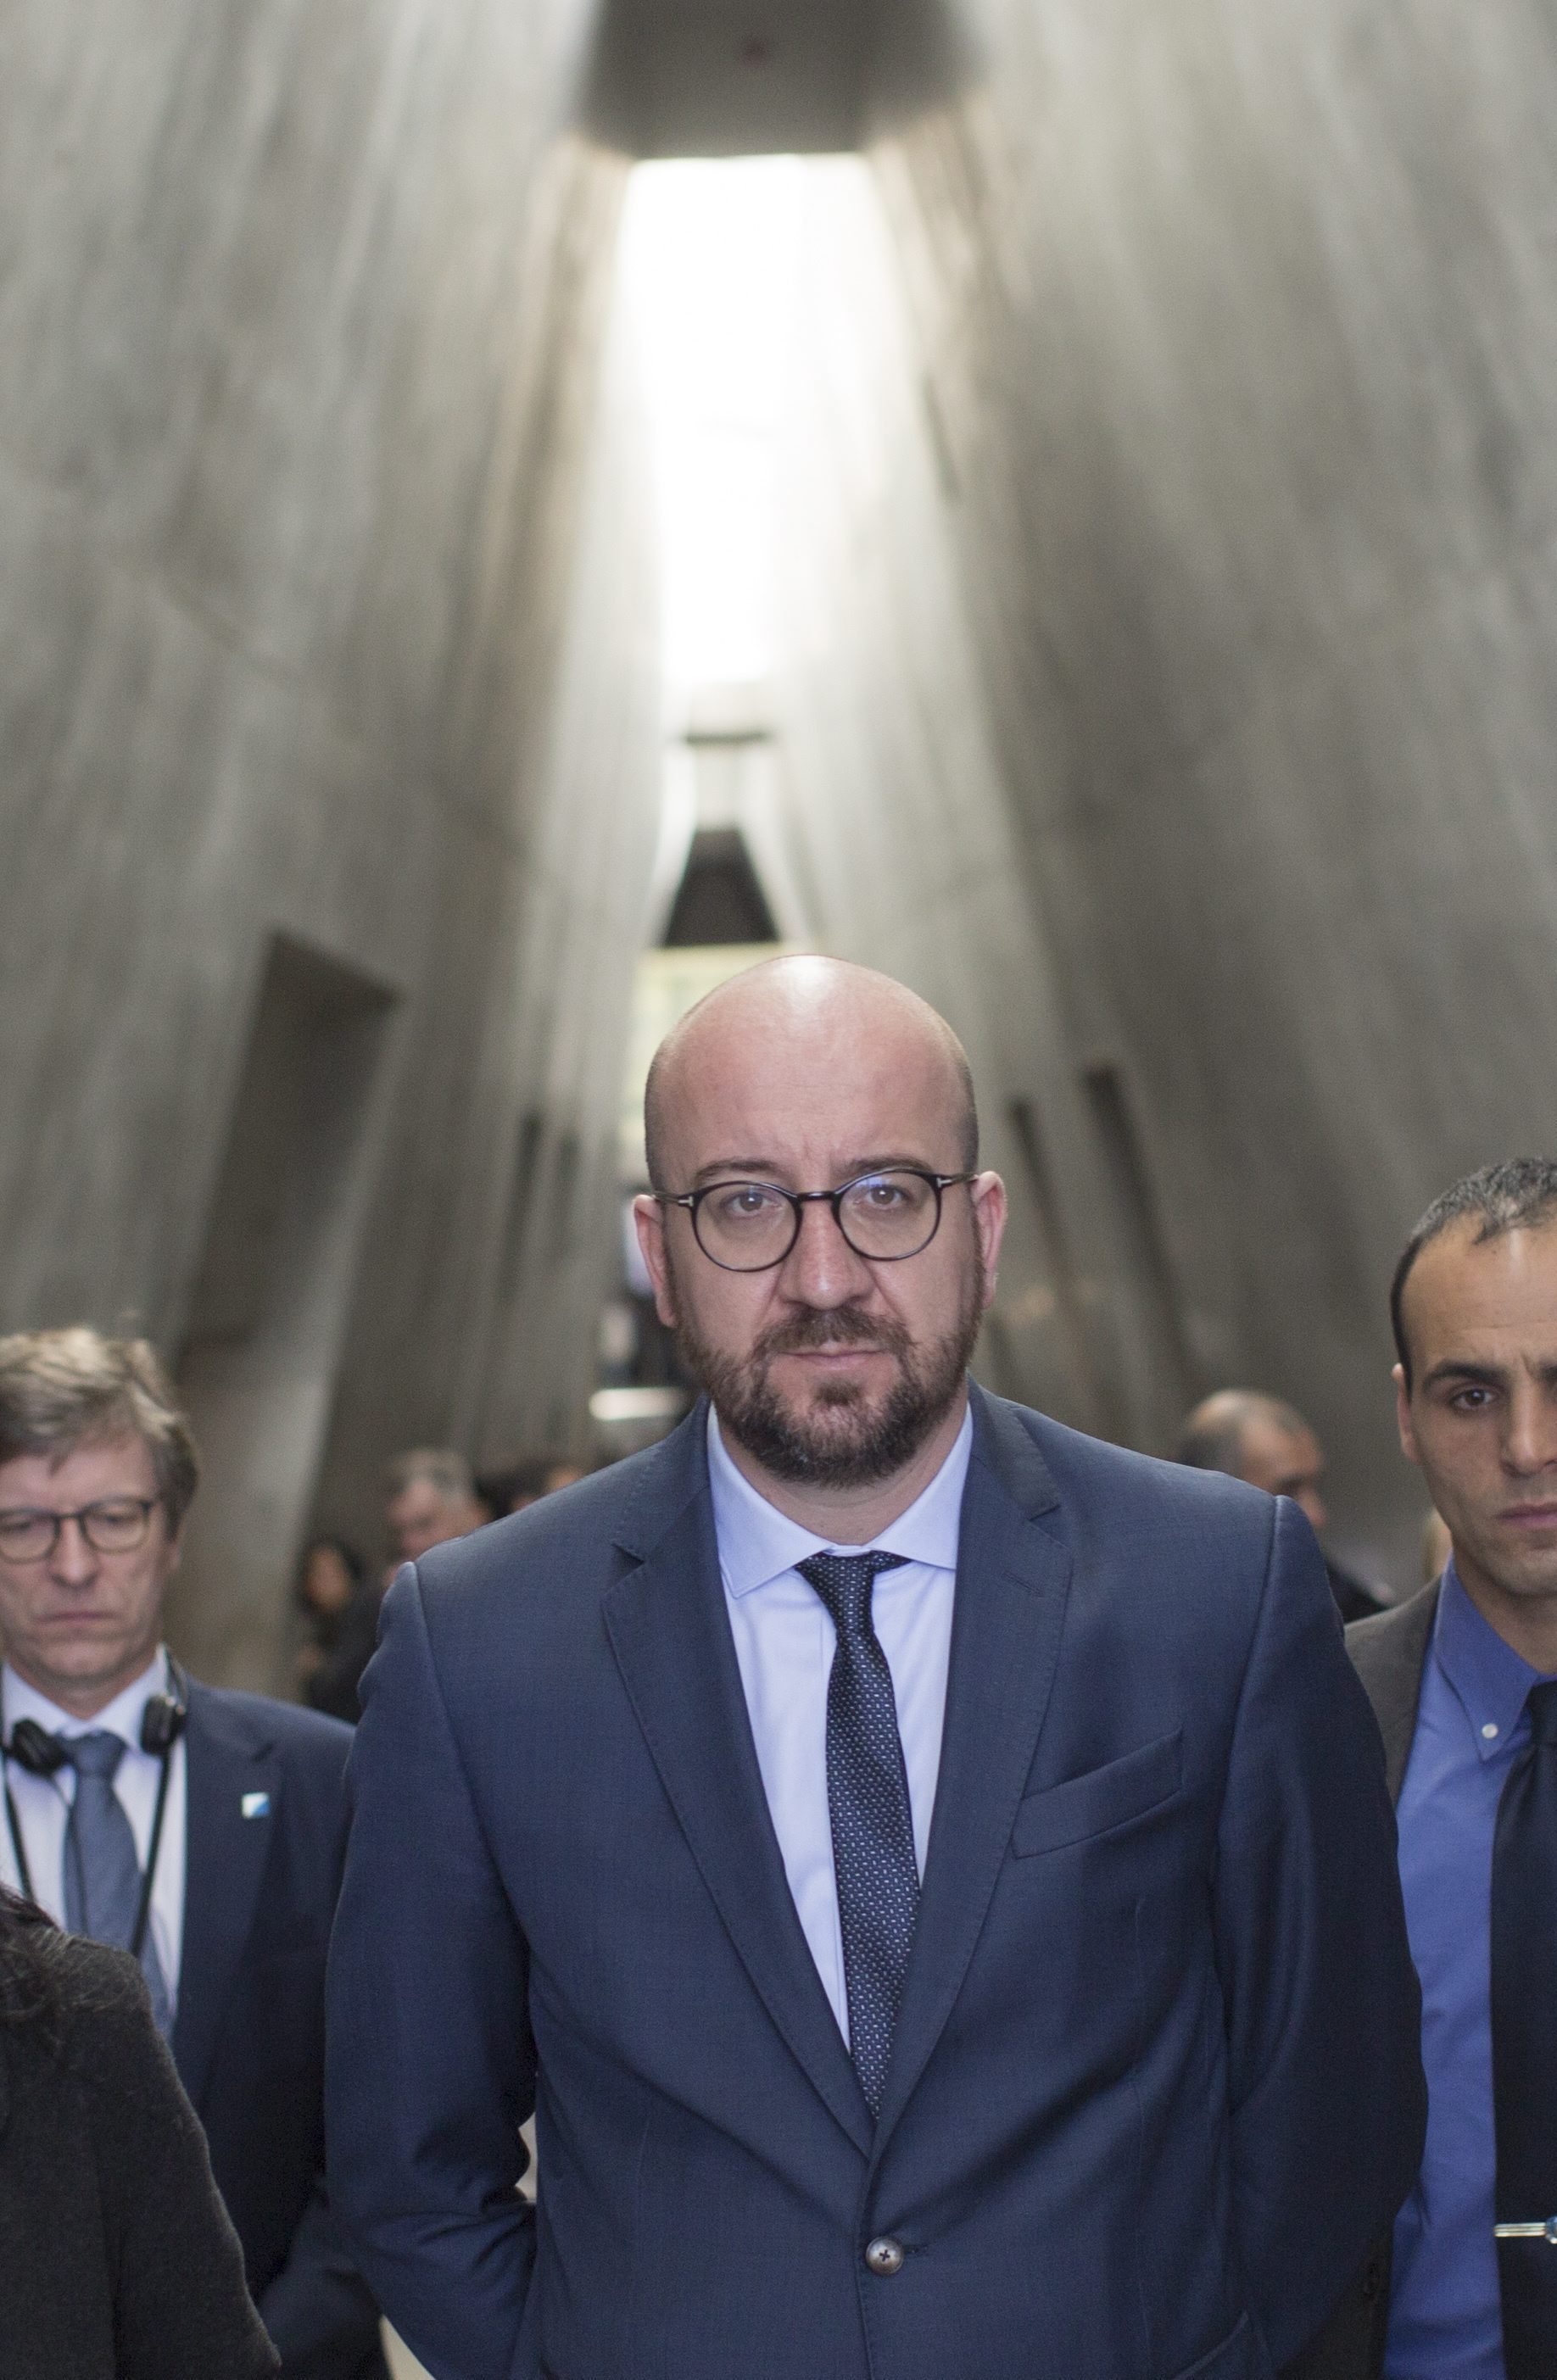 Spain-Belgium diplomatic tension over Puigdemont asylum offer